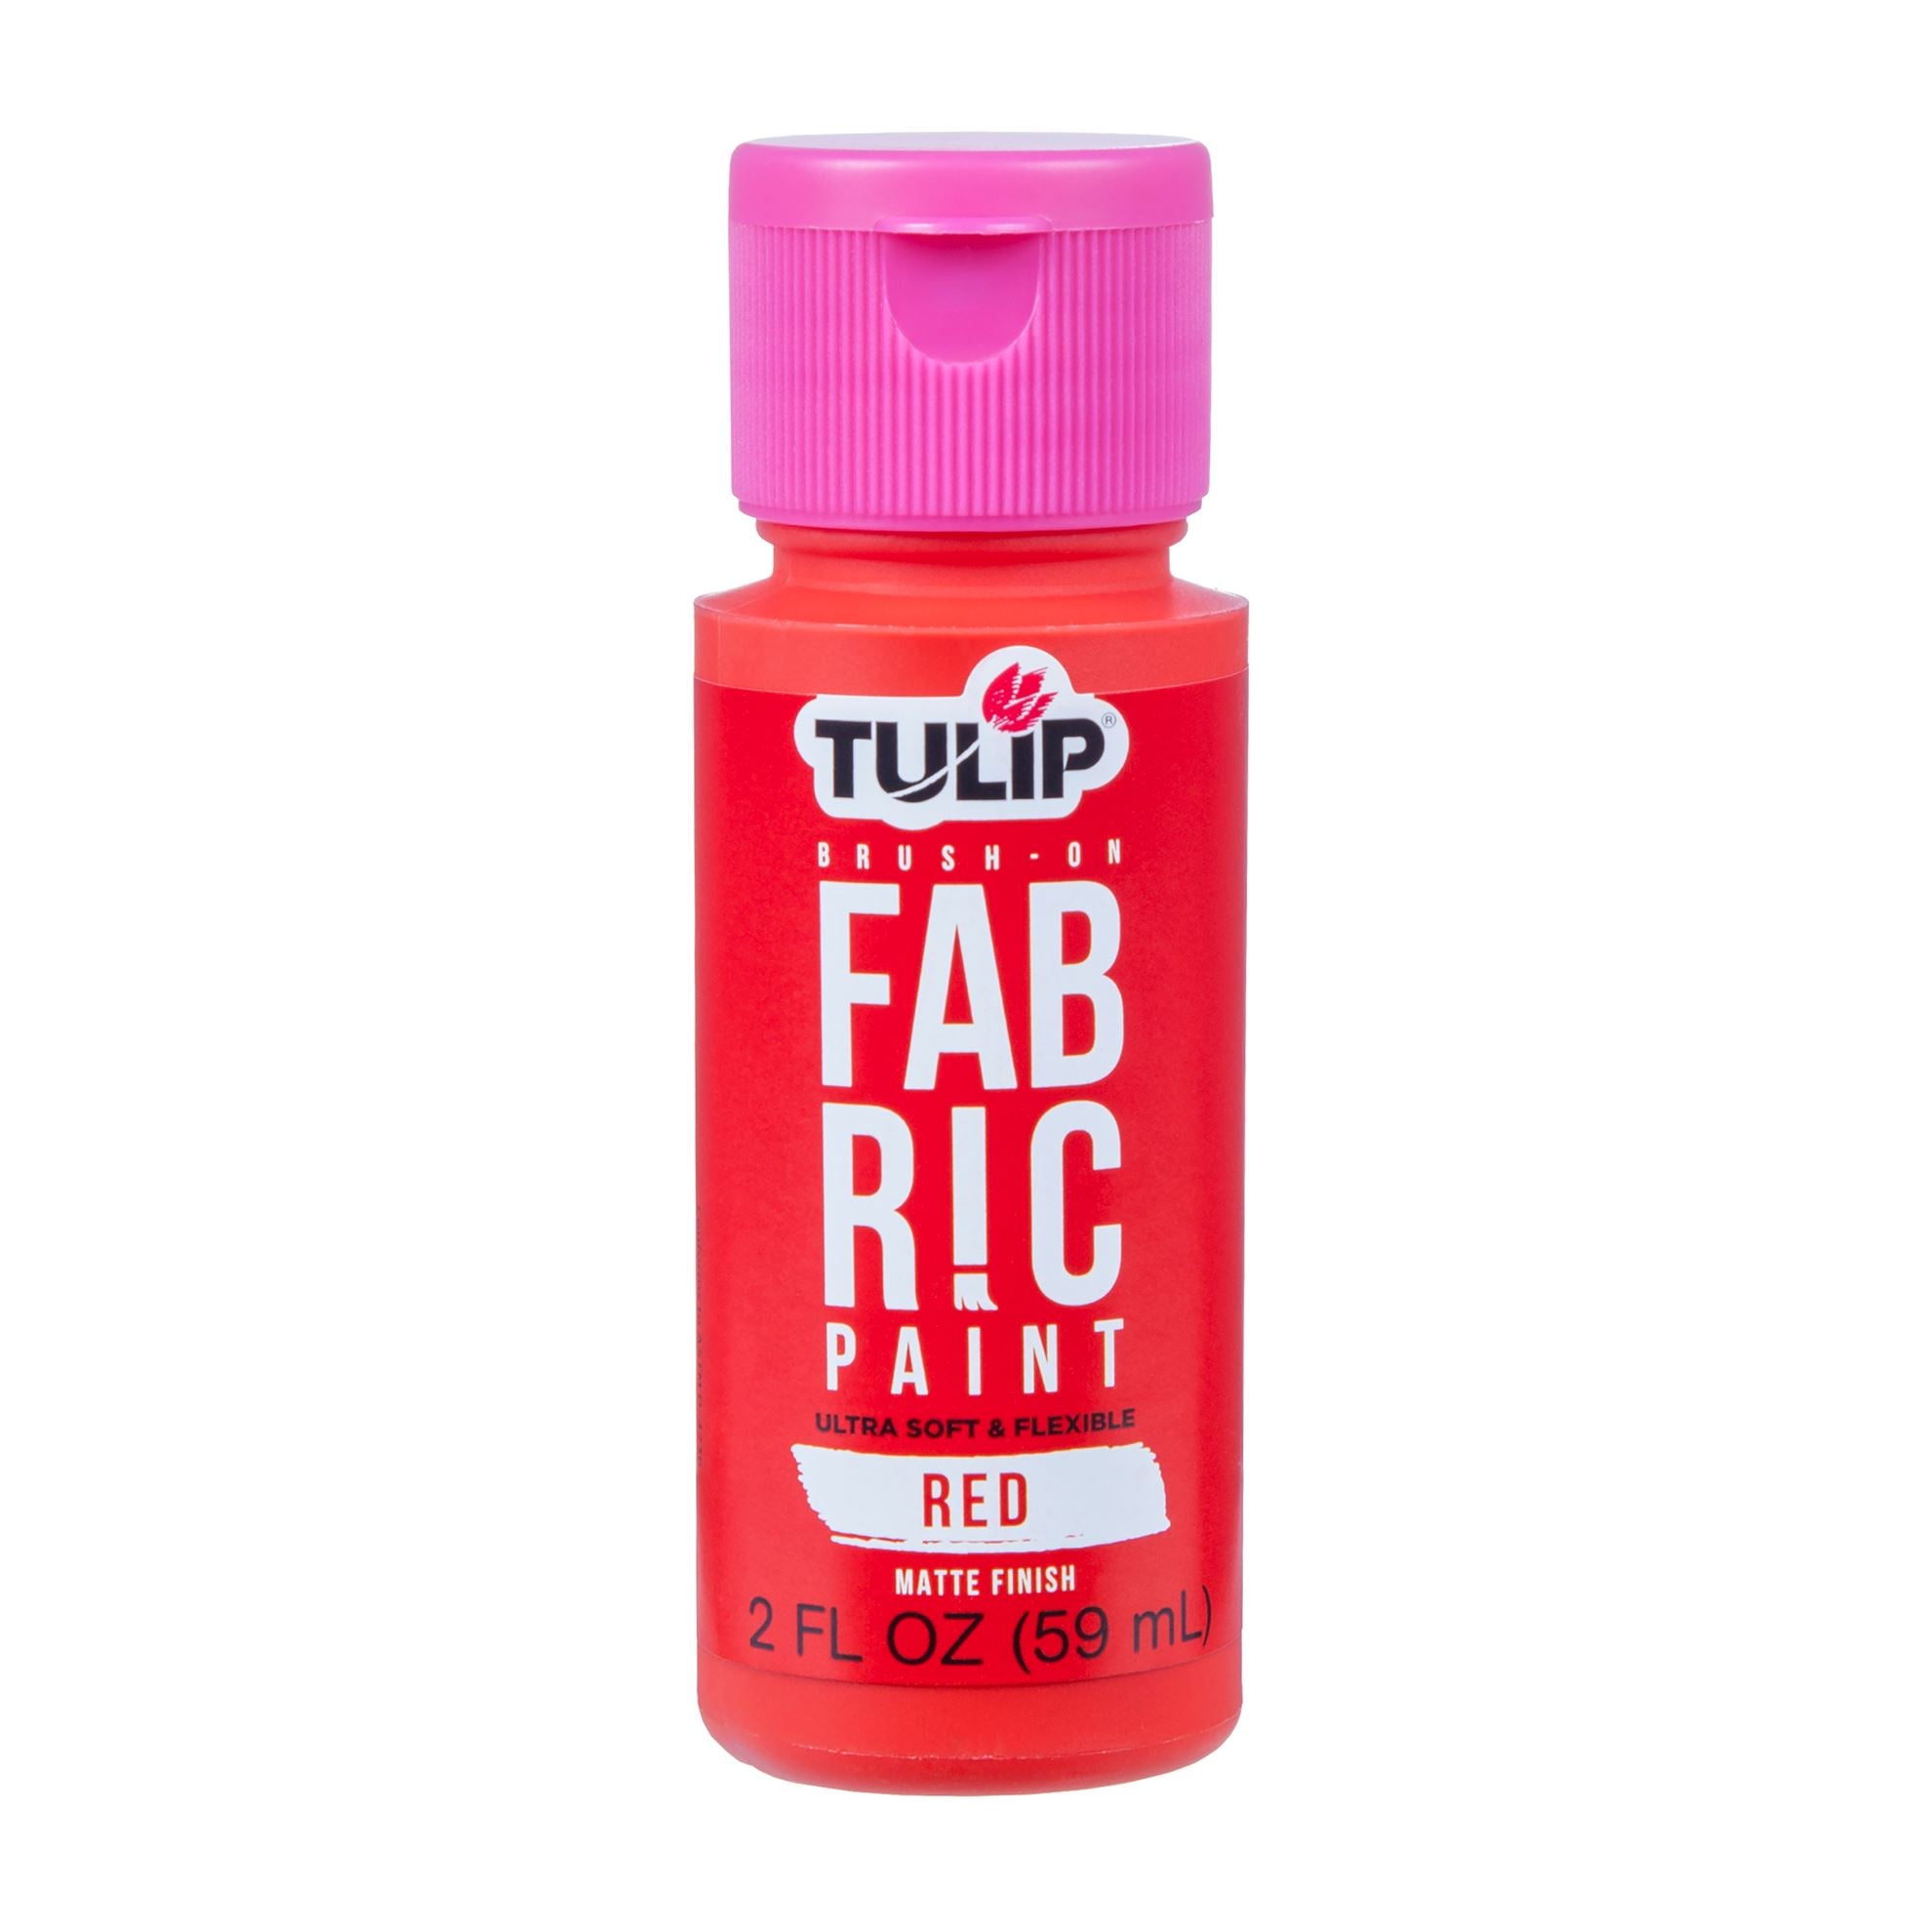 Tulip Brush-On Fabric Paint Red Matte 2 fl. oz. - 1